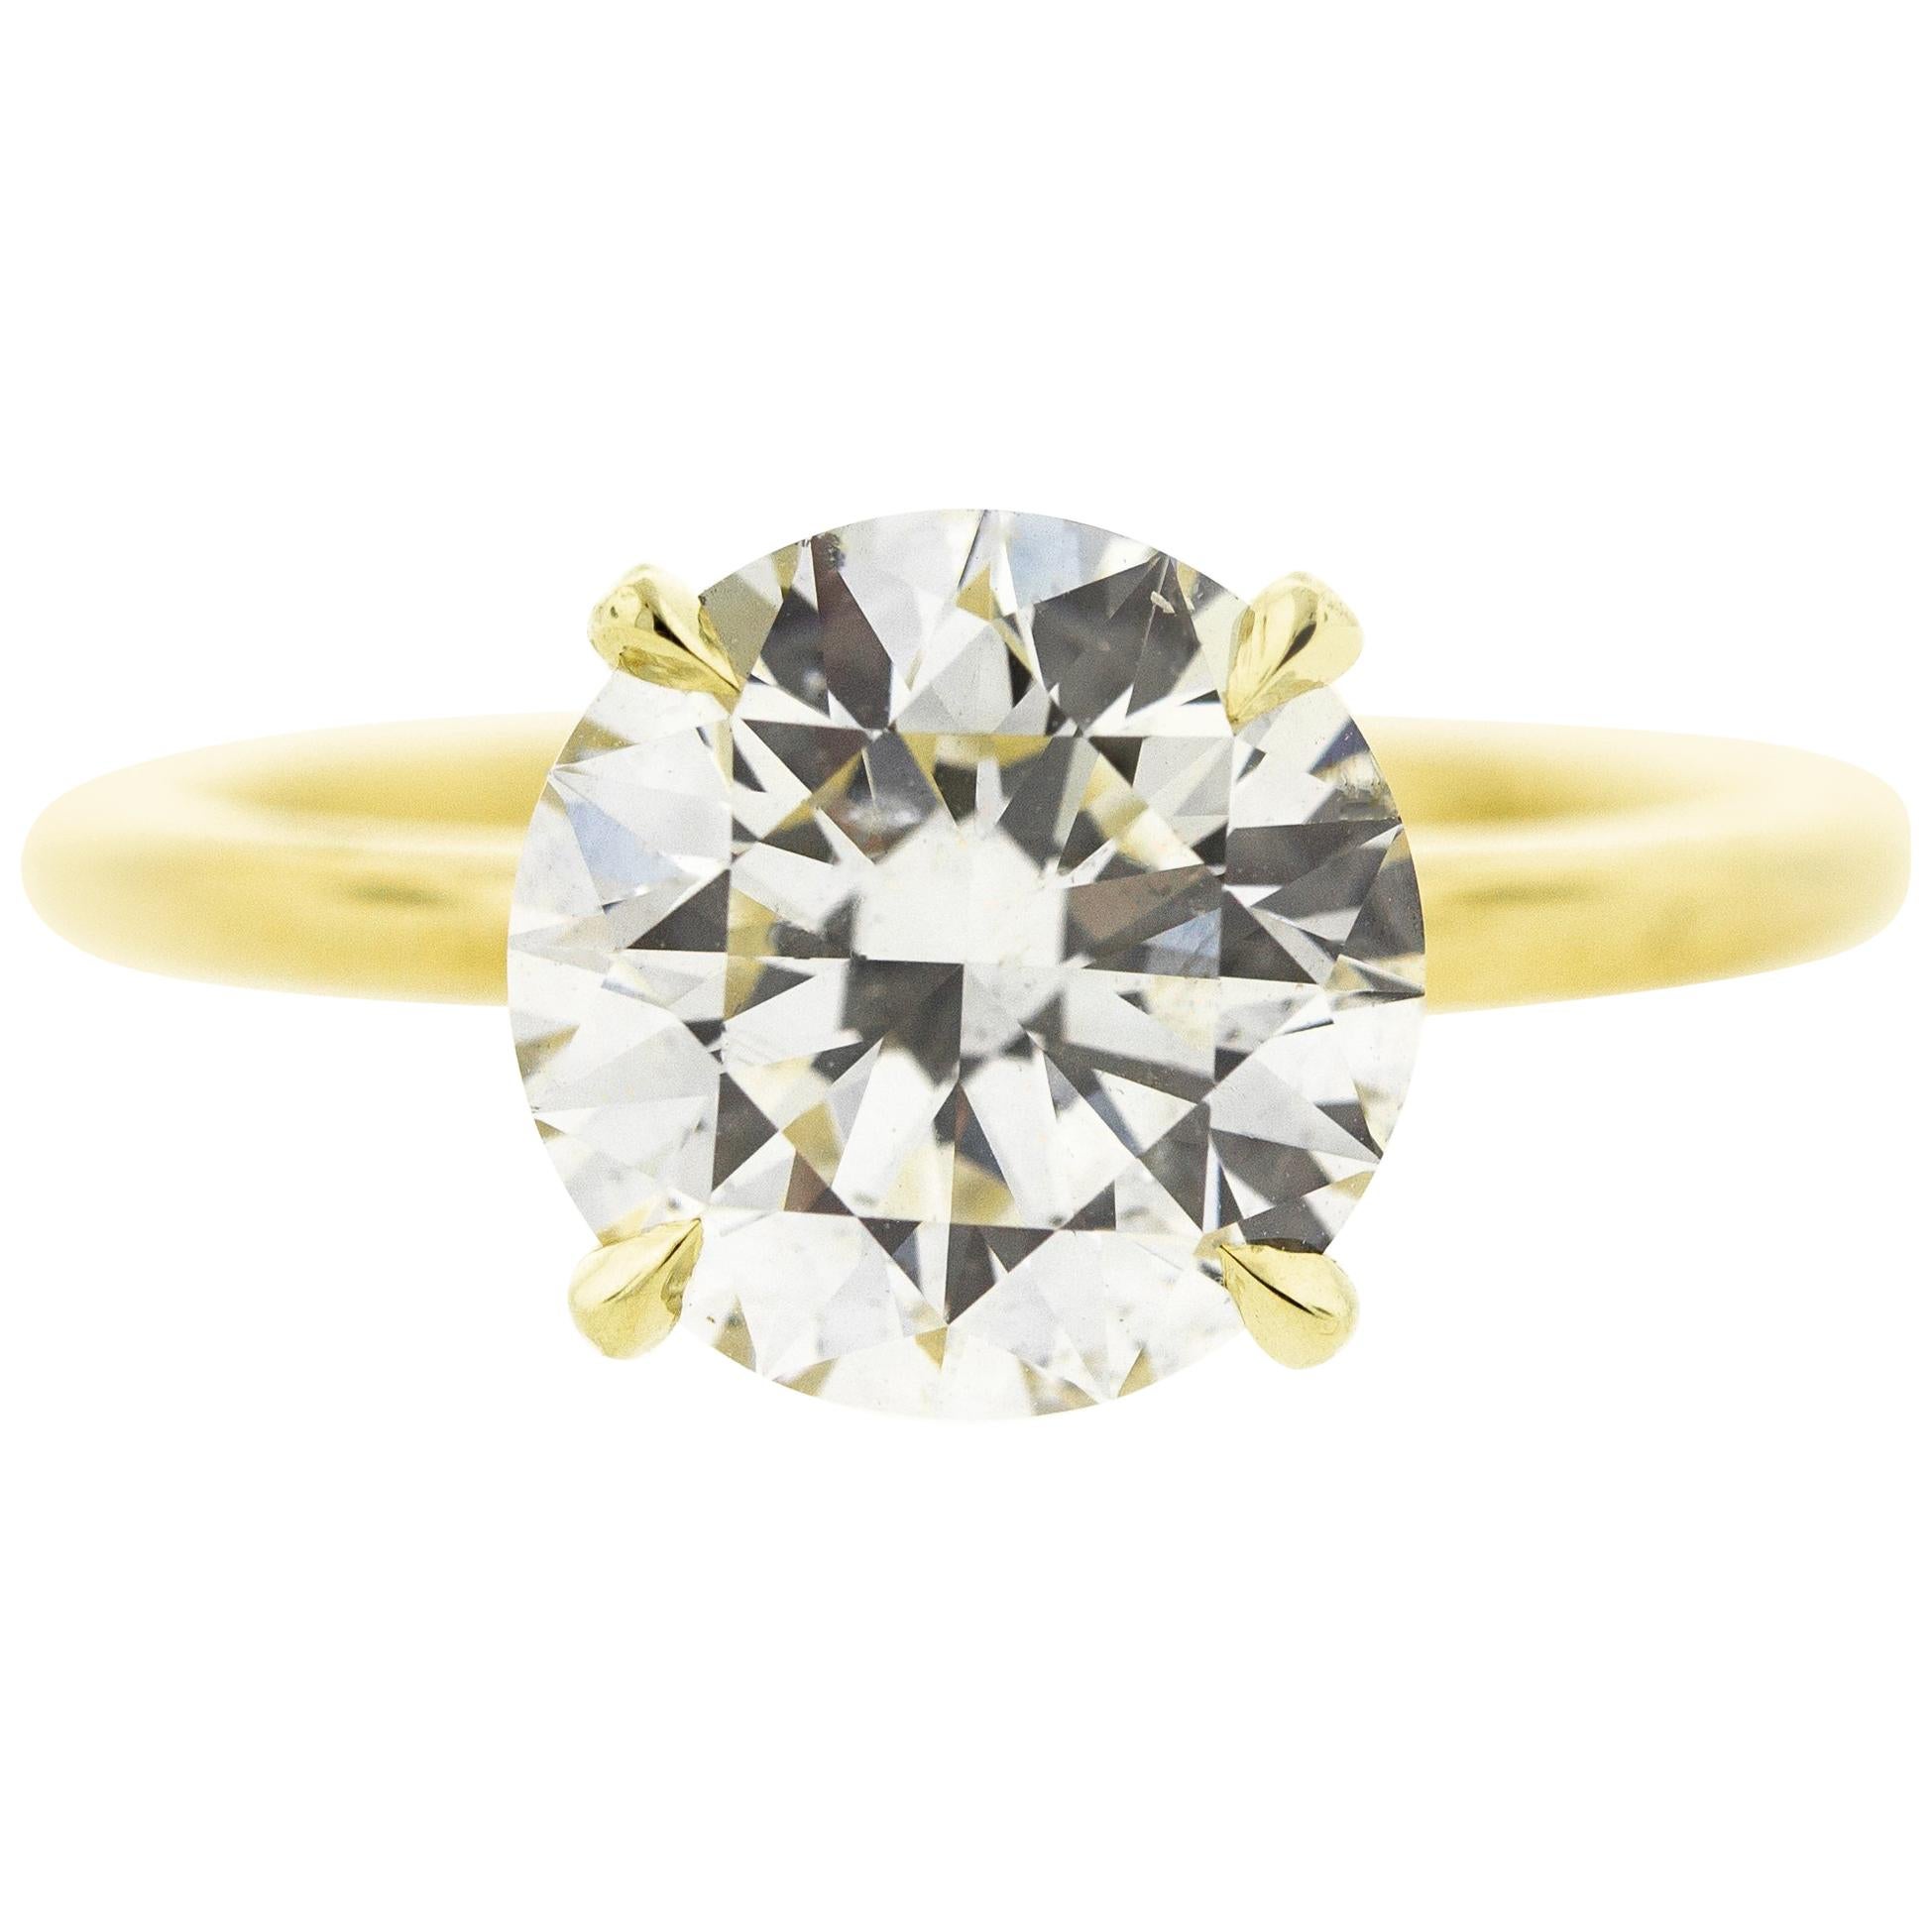 3.01 Carat Round Diamond Engagement Ring in Yellow Gold 'GIA'